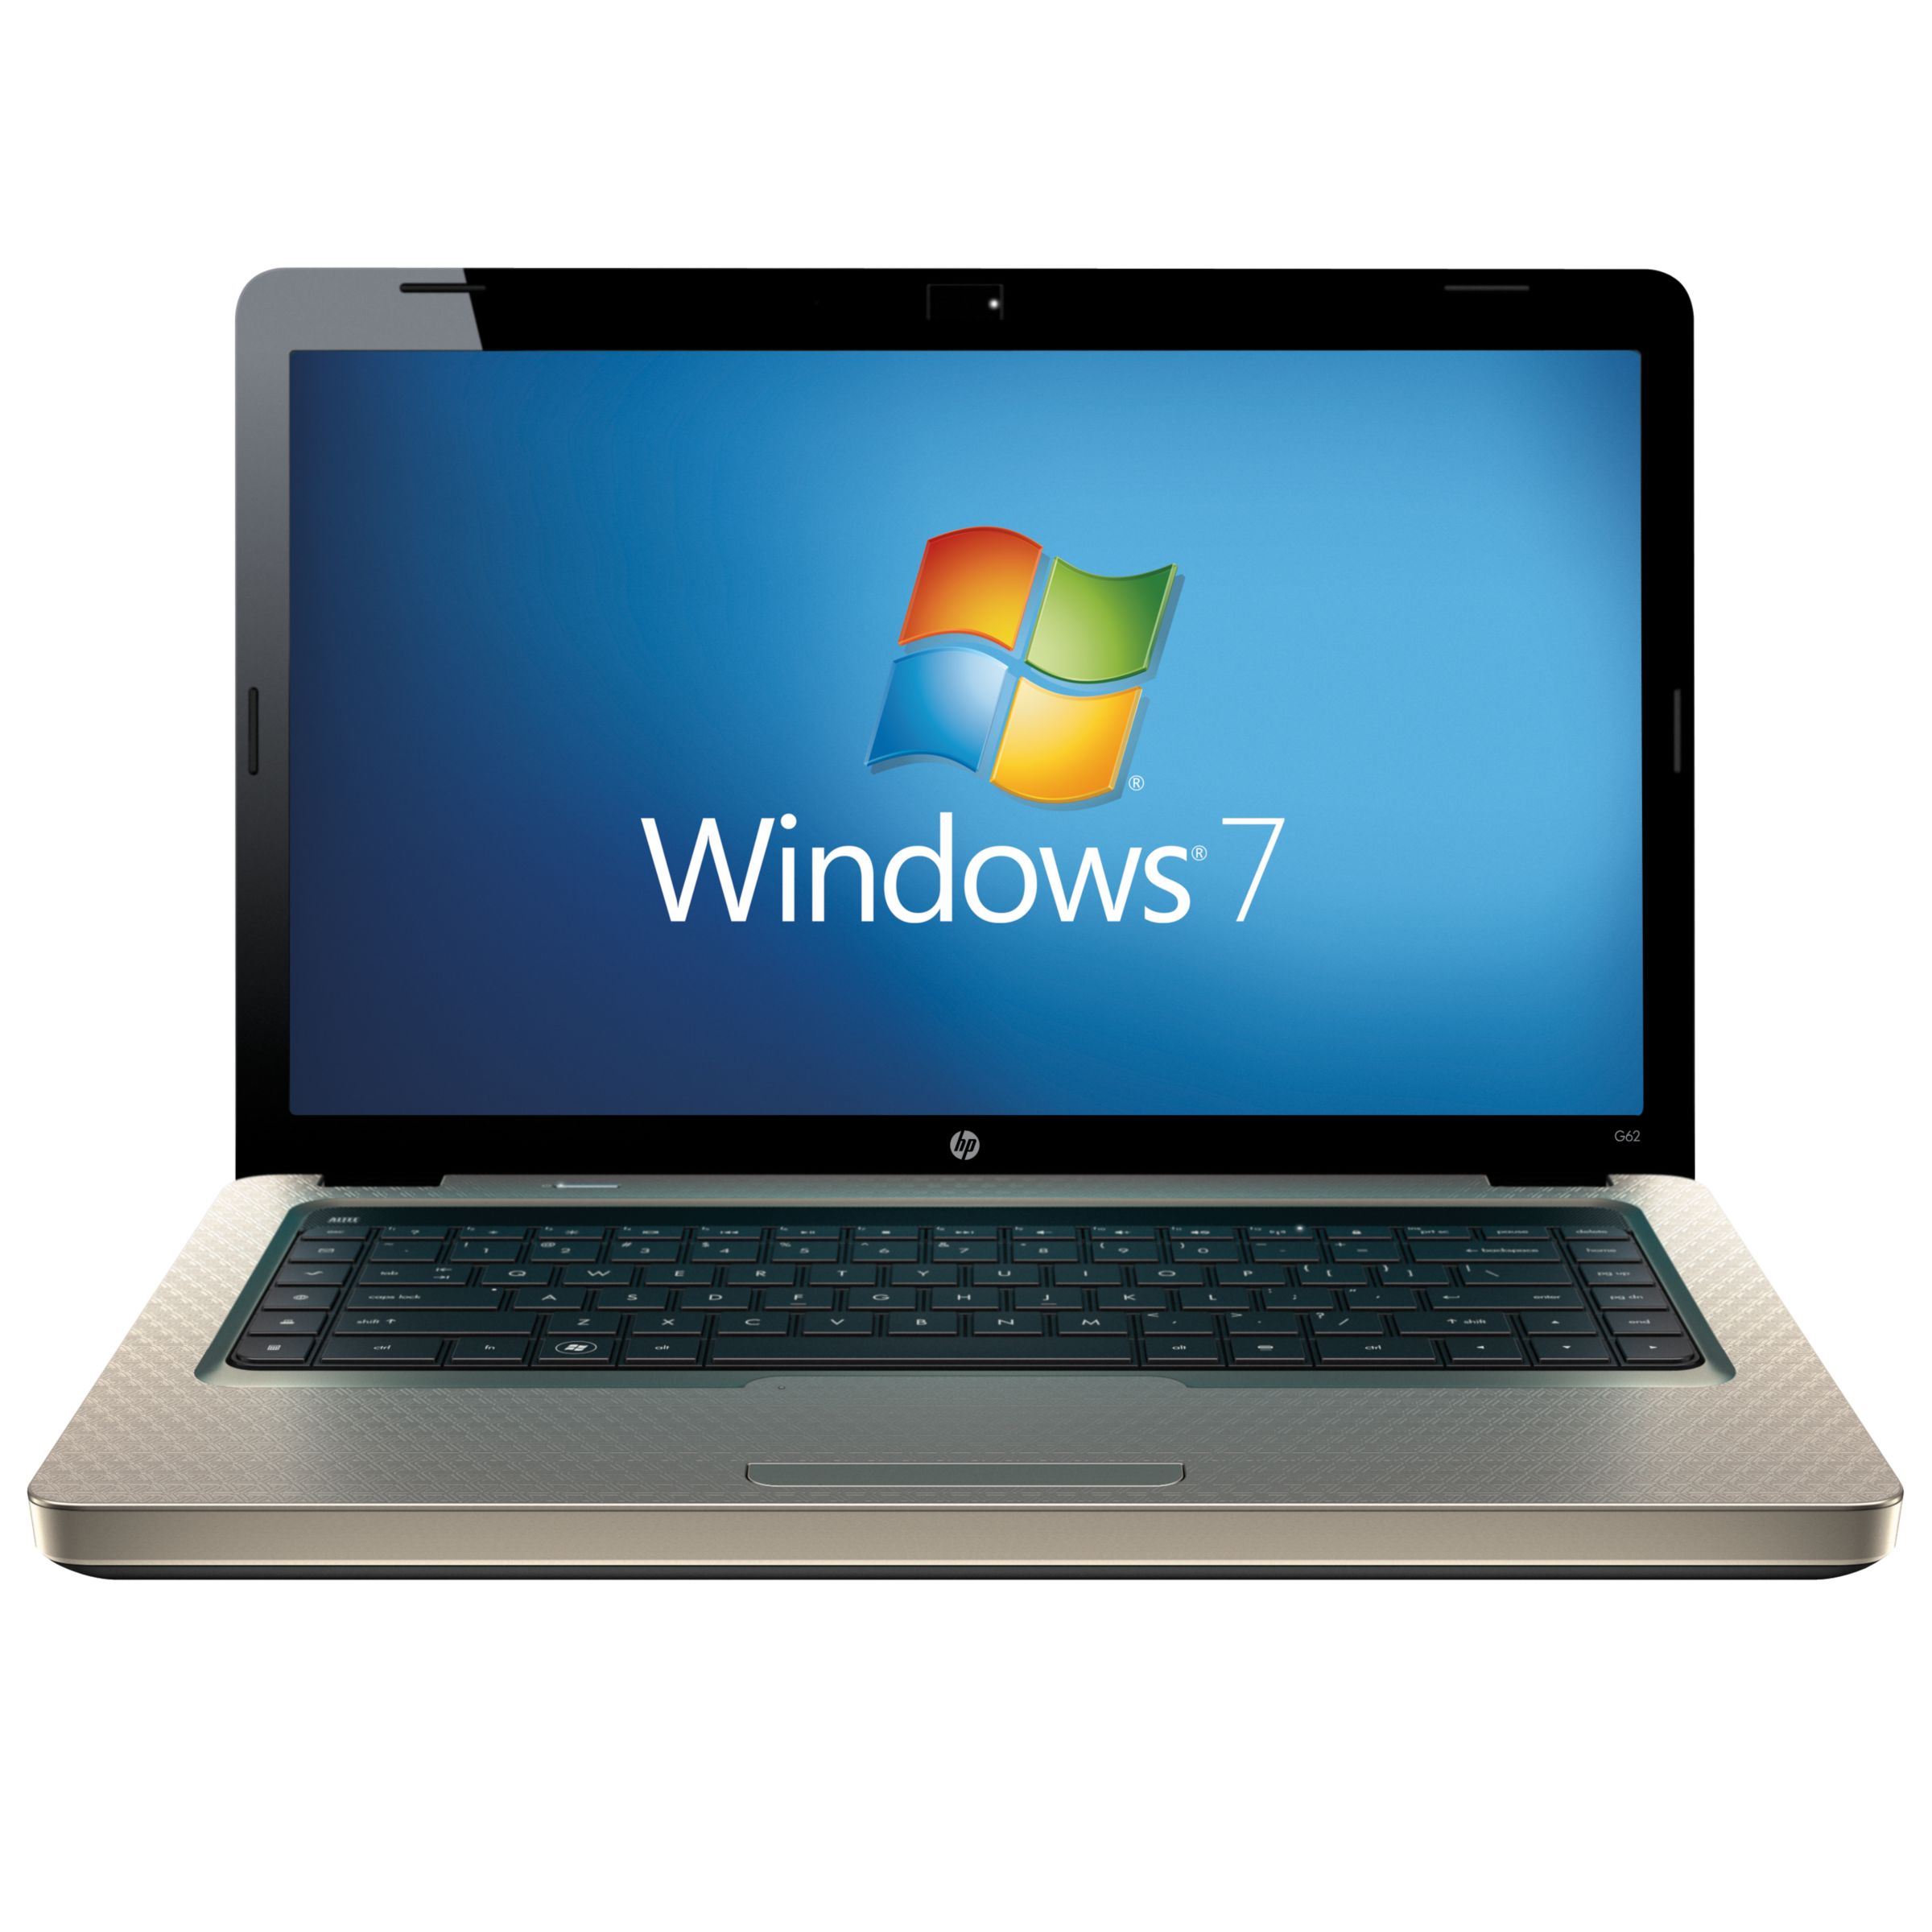 HP Pavilion G62-B20SA Laptop, AMD Phenom, 500GB, 2.1GHz, 4GB RAM with 15.6 Inch Display at John Lewis